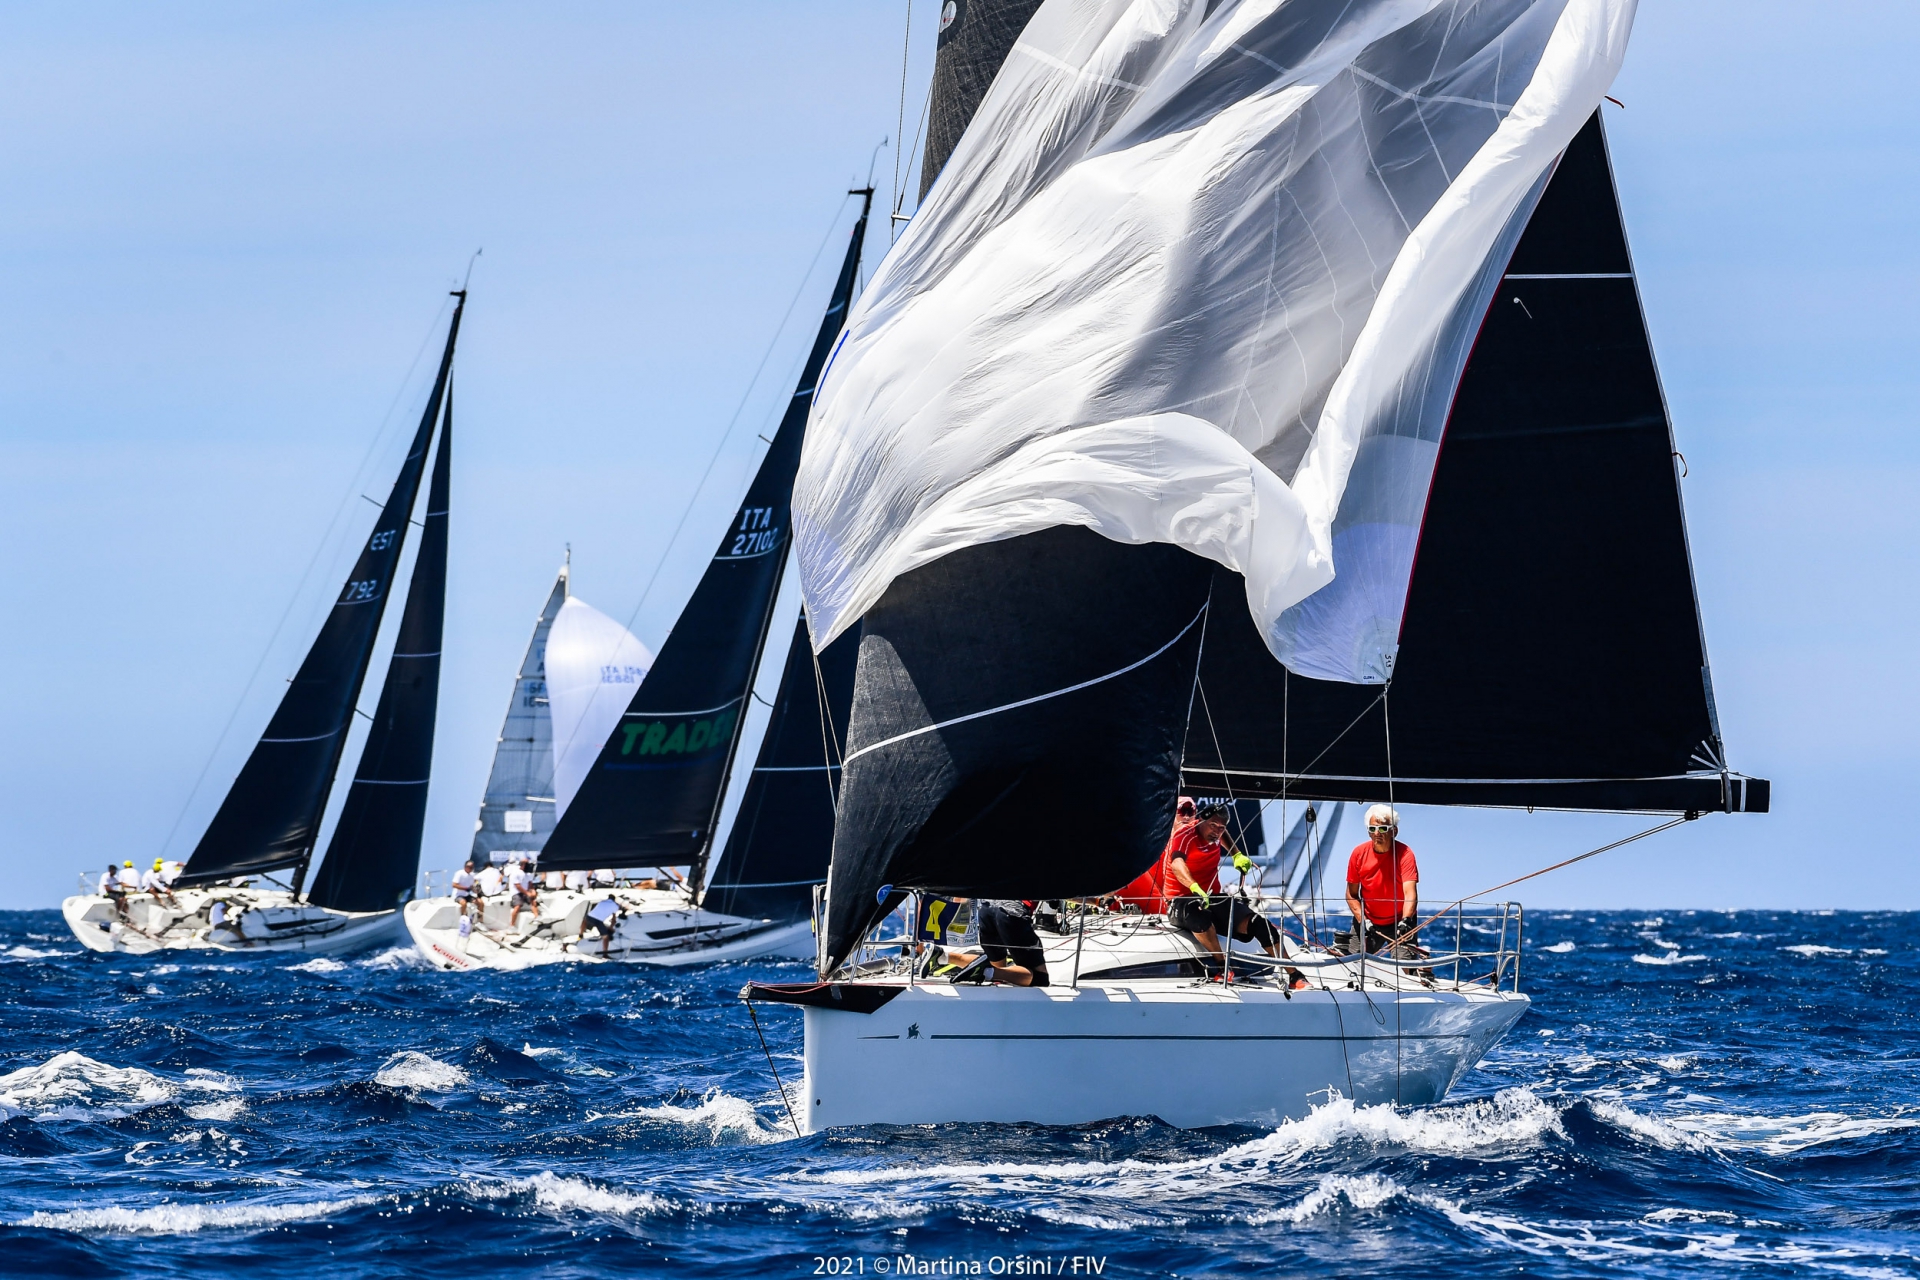  La prima Italia Yachts Sailing Week si terrà a Porto Cervo - NEWS - Yacht Club Costa Smeralda